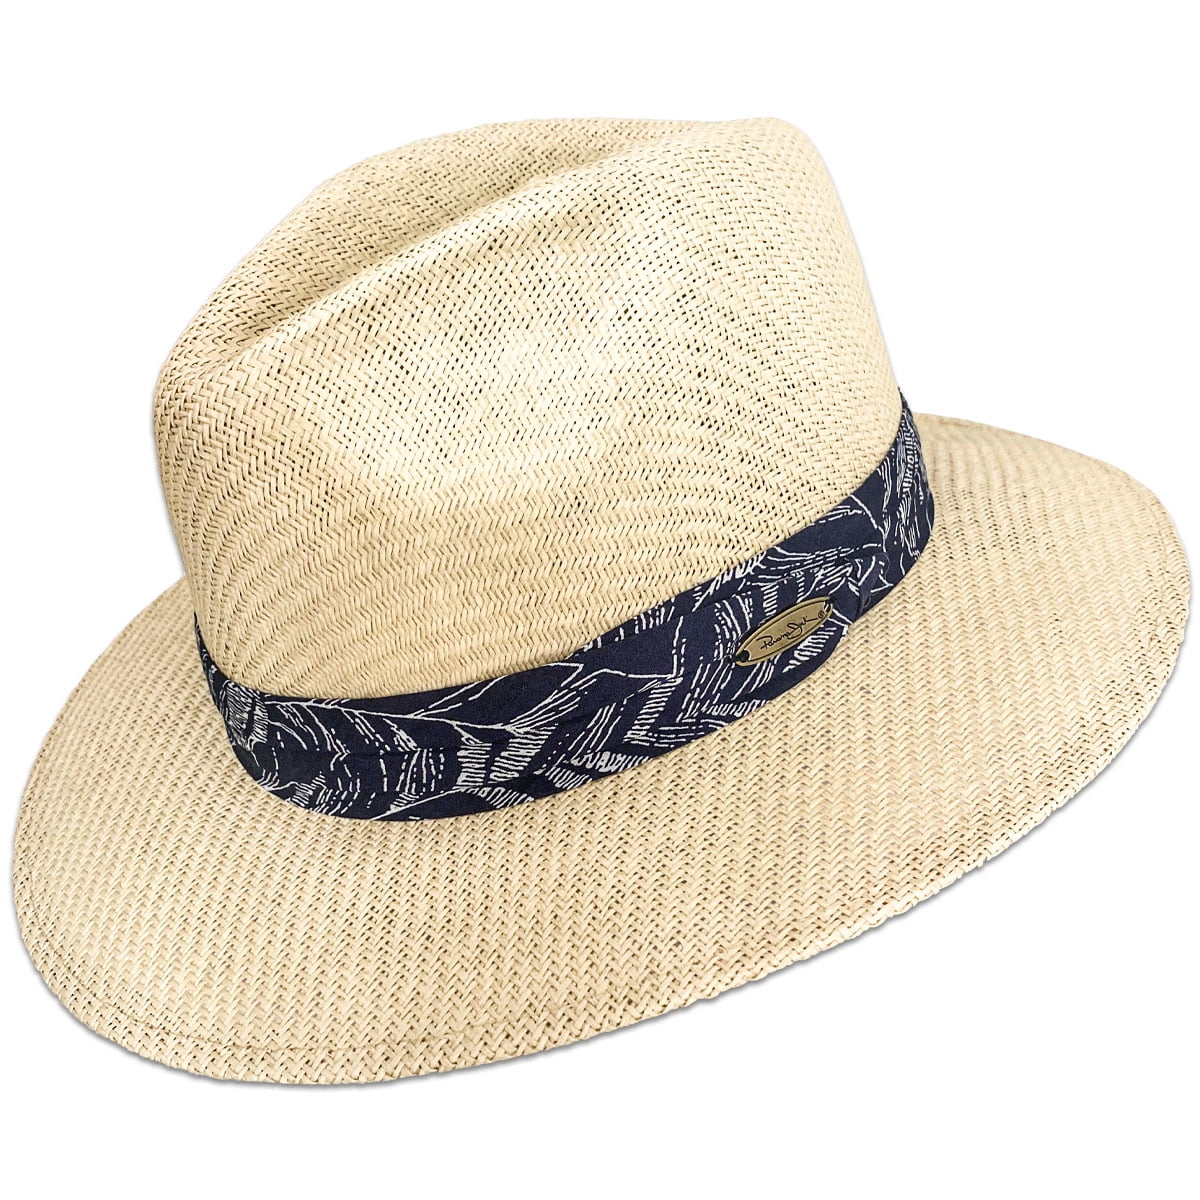 Dorfman Pacific Hats Matte Toyo Straw Trilby Hat Black